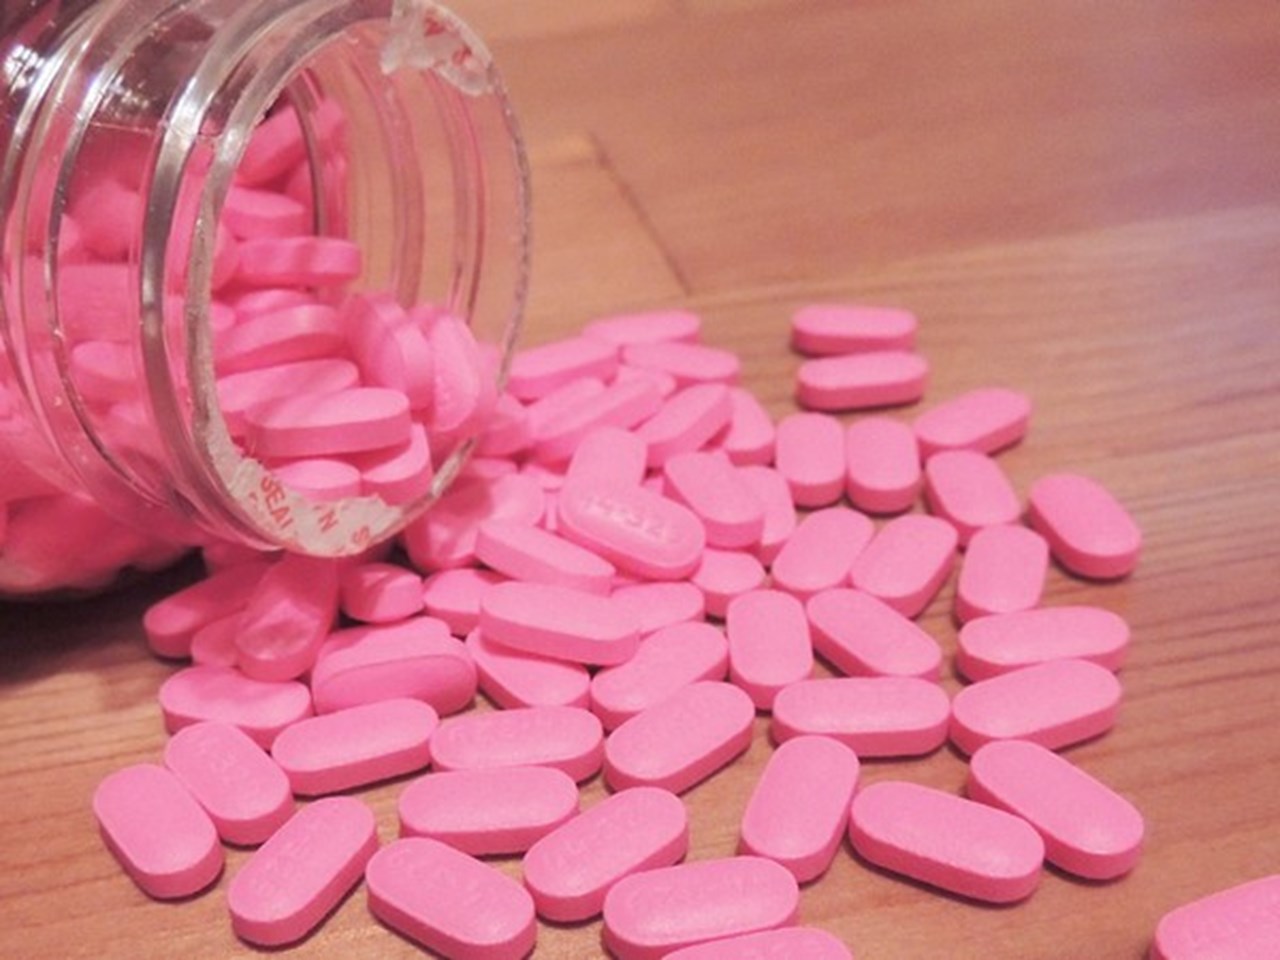 Розовые таблетки название. Розовые таблетки. Таблетки розового цвета. Наркотические розовые таблетки. Ярко розовые таблетки.